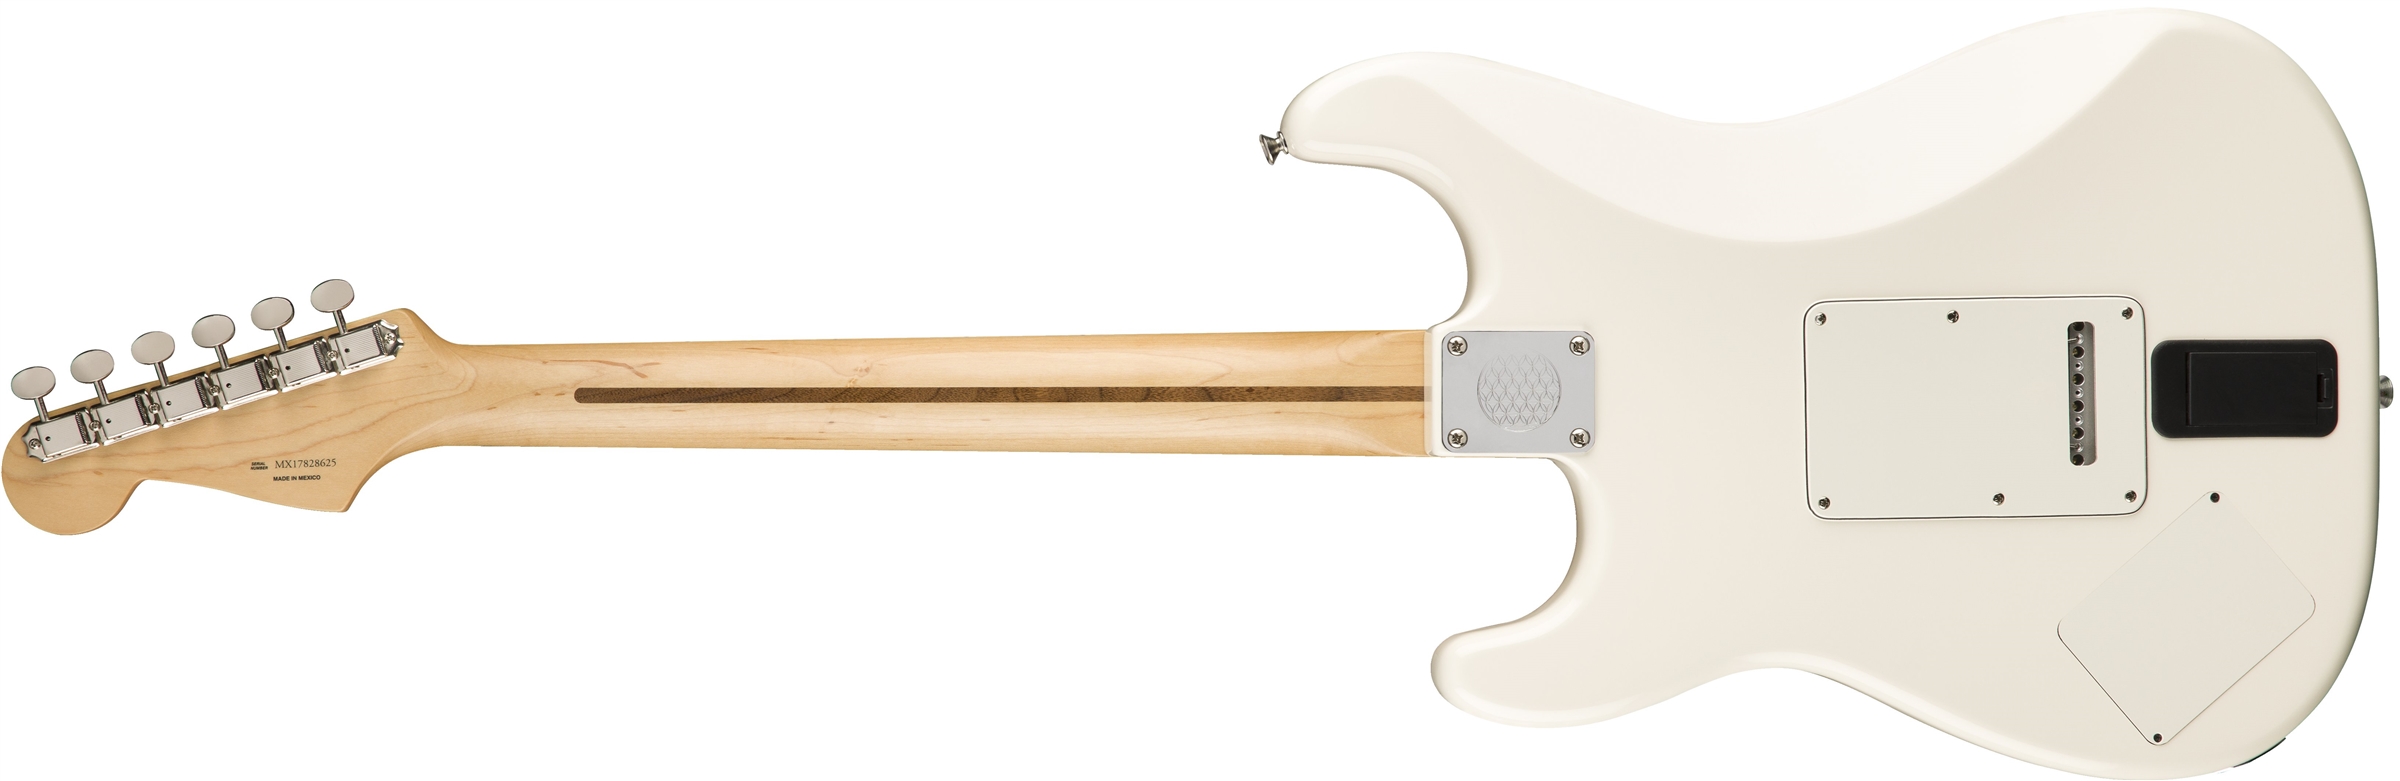 Fender EOB Sustainer Stratocaster背面画像